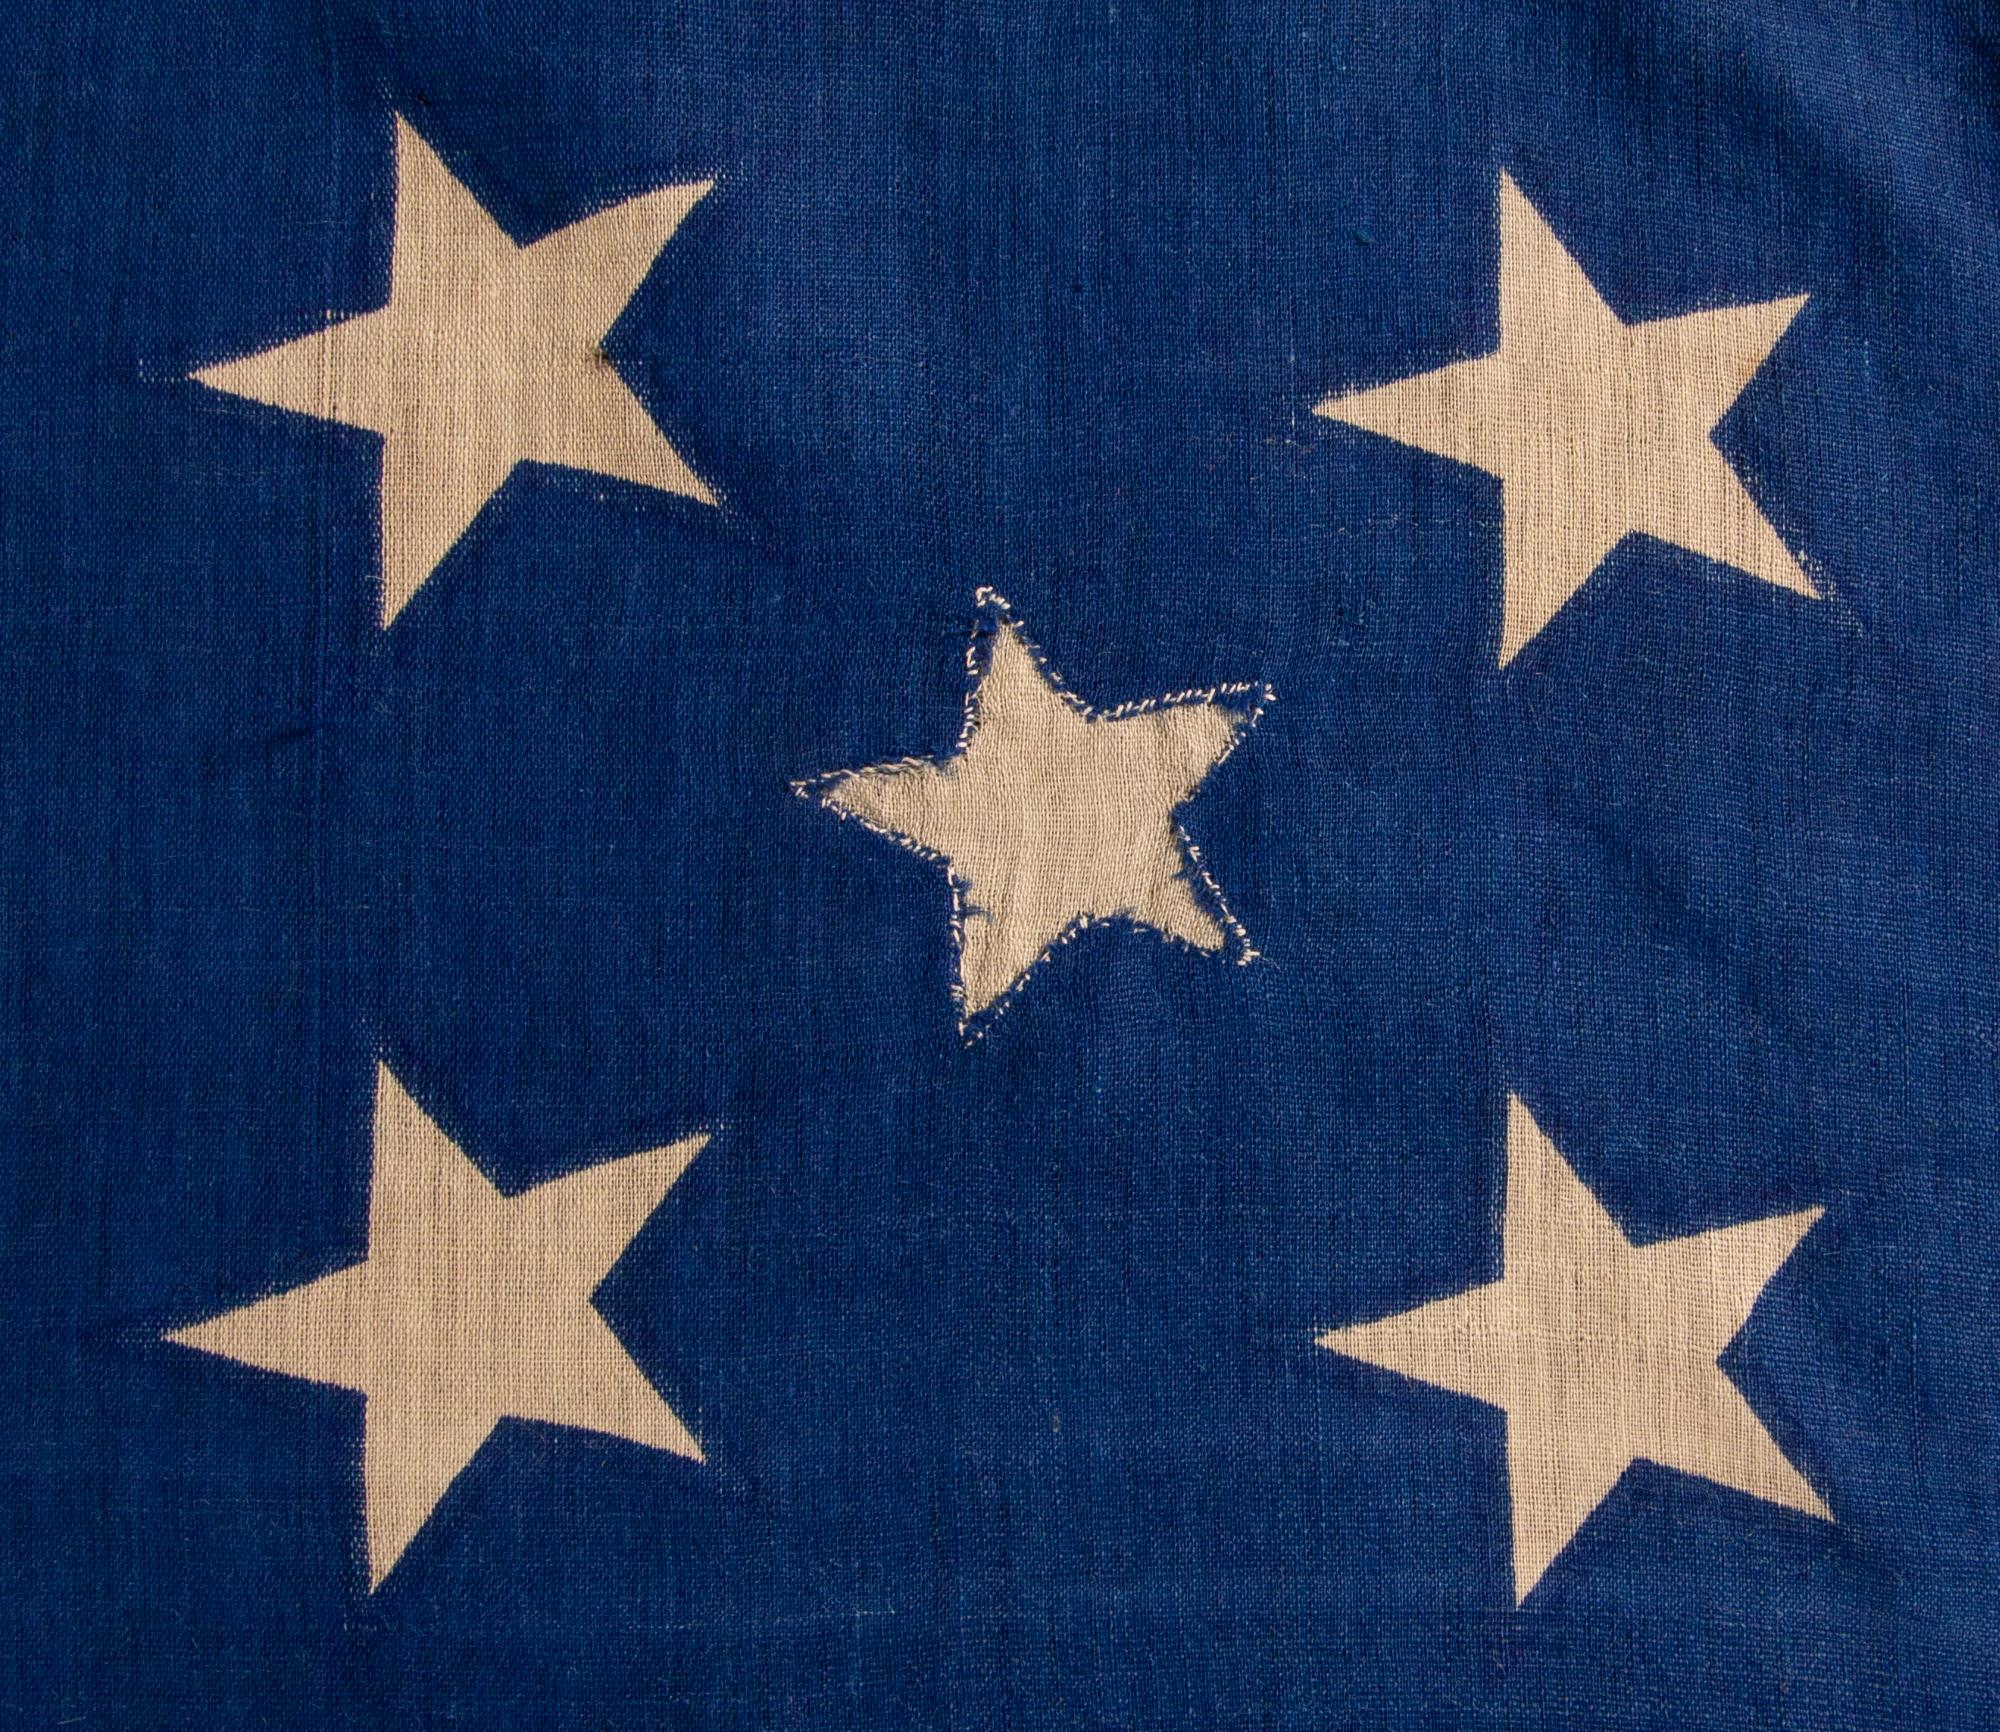 Cotton 34 Star Antique American flag, Kansas Statehood, Civil War Period, ca 1861-1863 For Sale